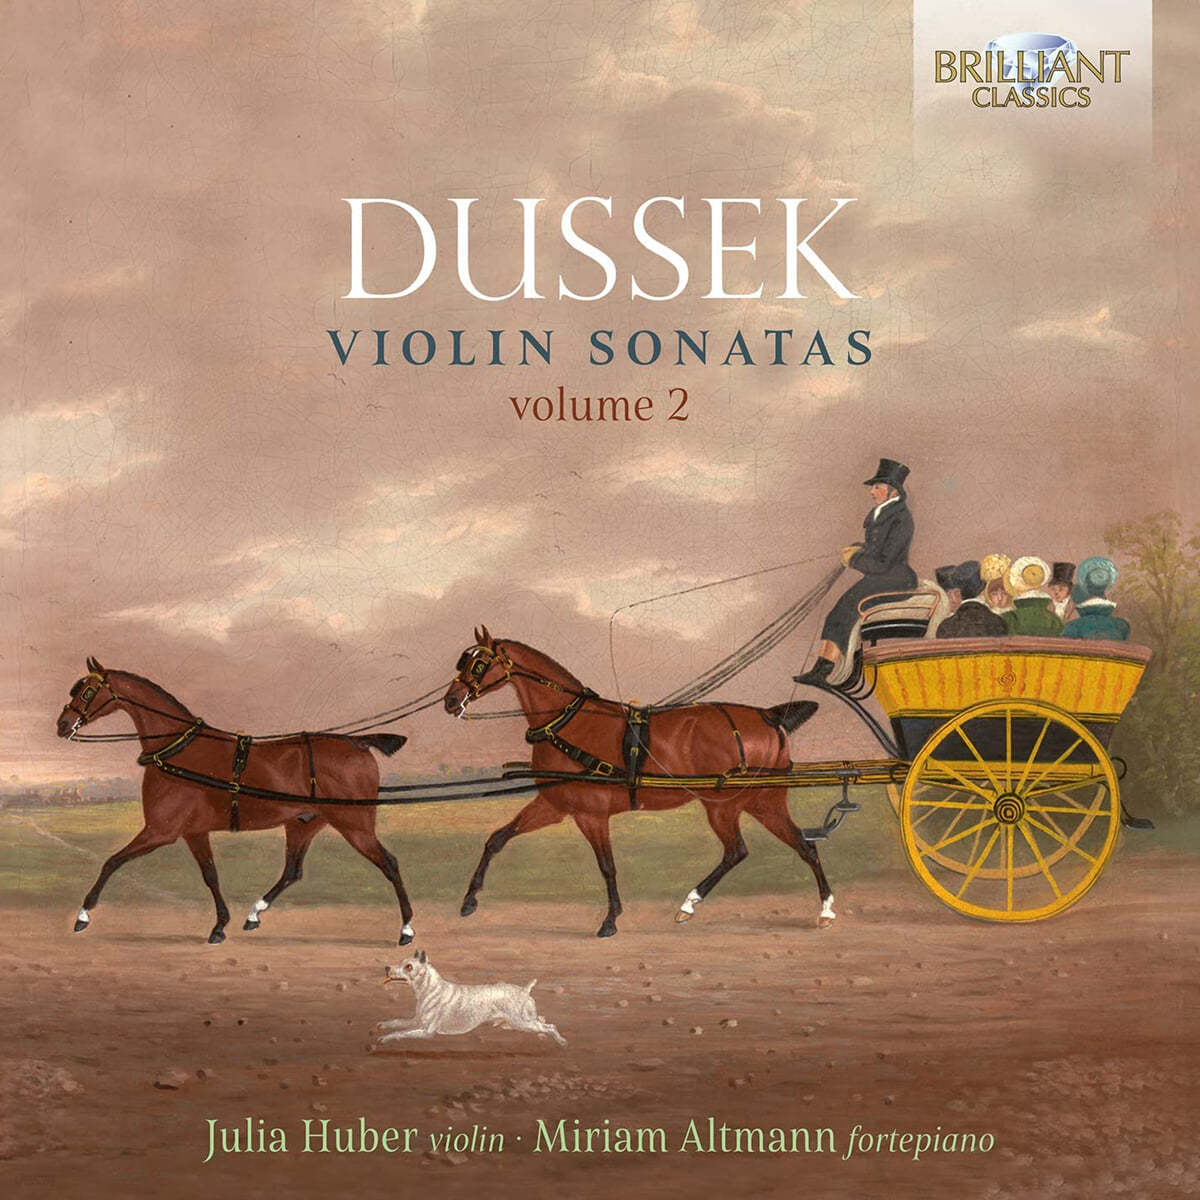 Julia Huber / Miriam Altmann 두세크: 바이올린 소나타 2집 (Dussek: Violin Sonatas Vol. 2 - Op.1, Op.28) 